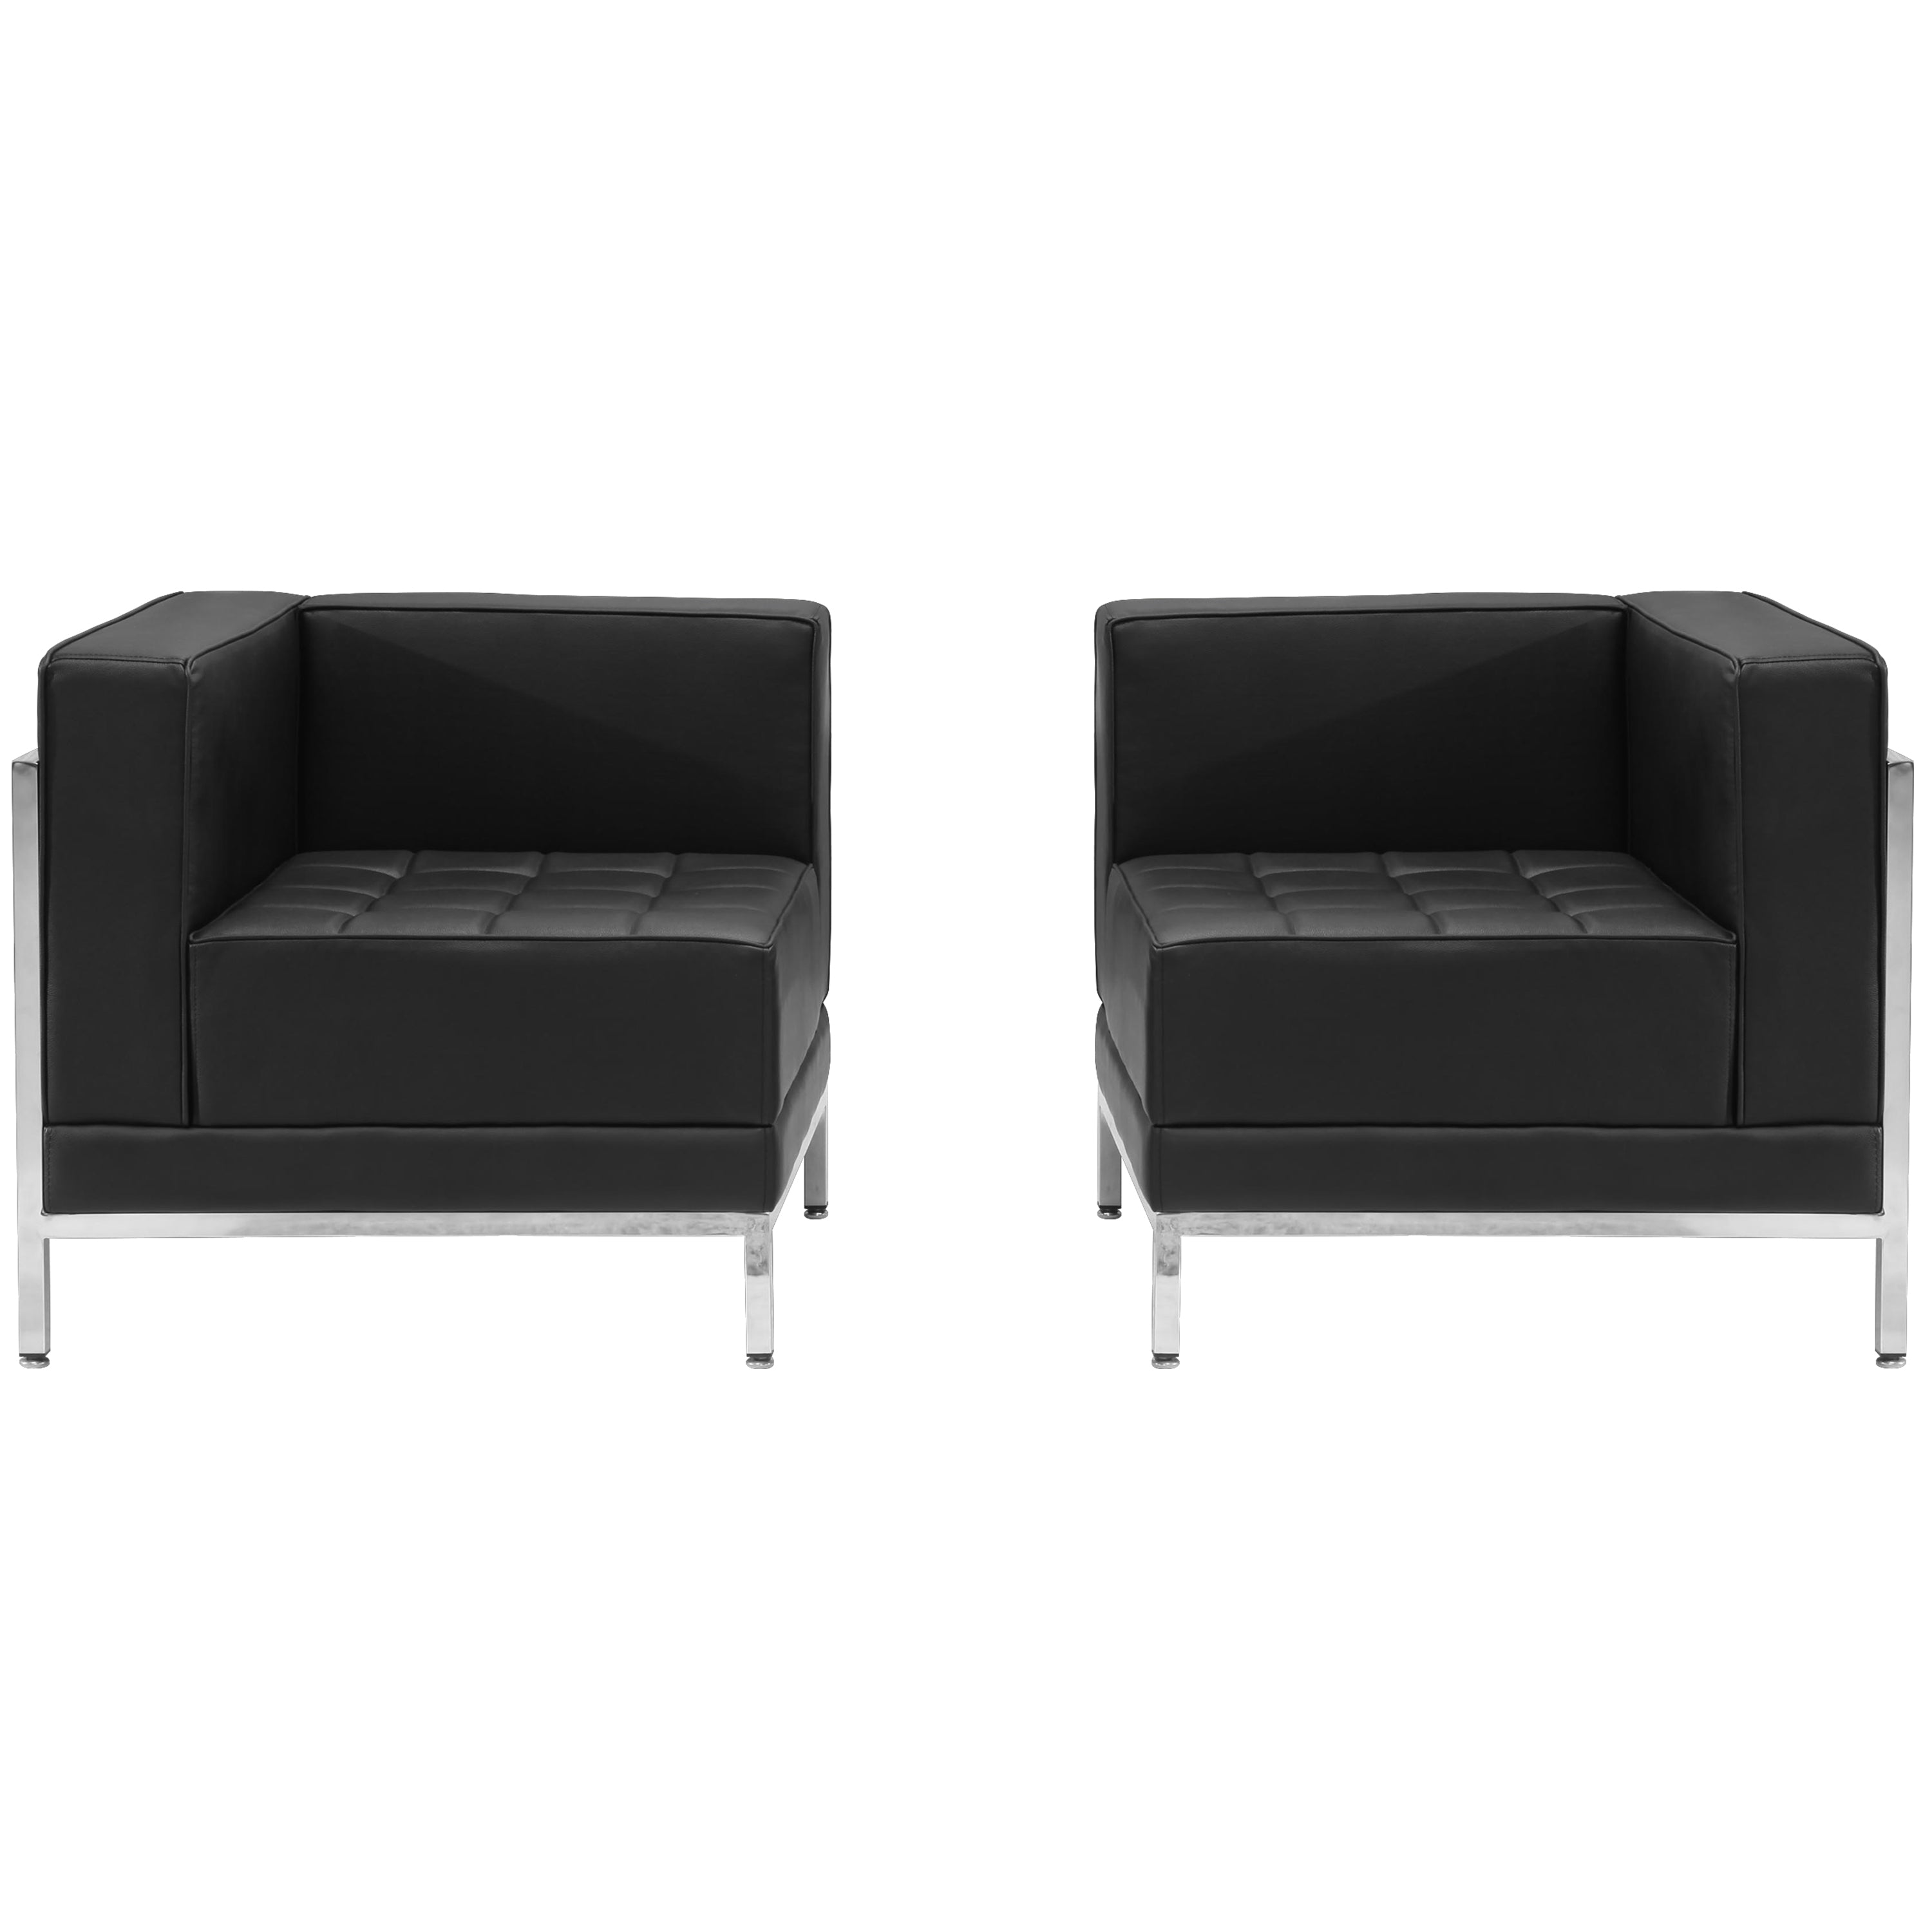 HERCULES Imagination Series LeatherSoft 2 Piece Corner Chair Set-Modular Reception Set-Flash Furniture-Wall2Wall Furnishings